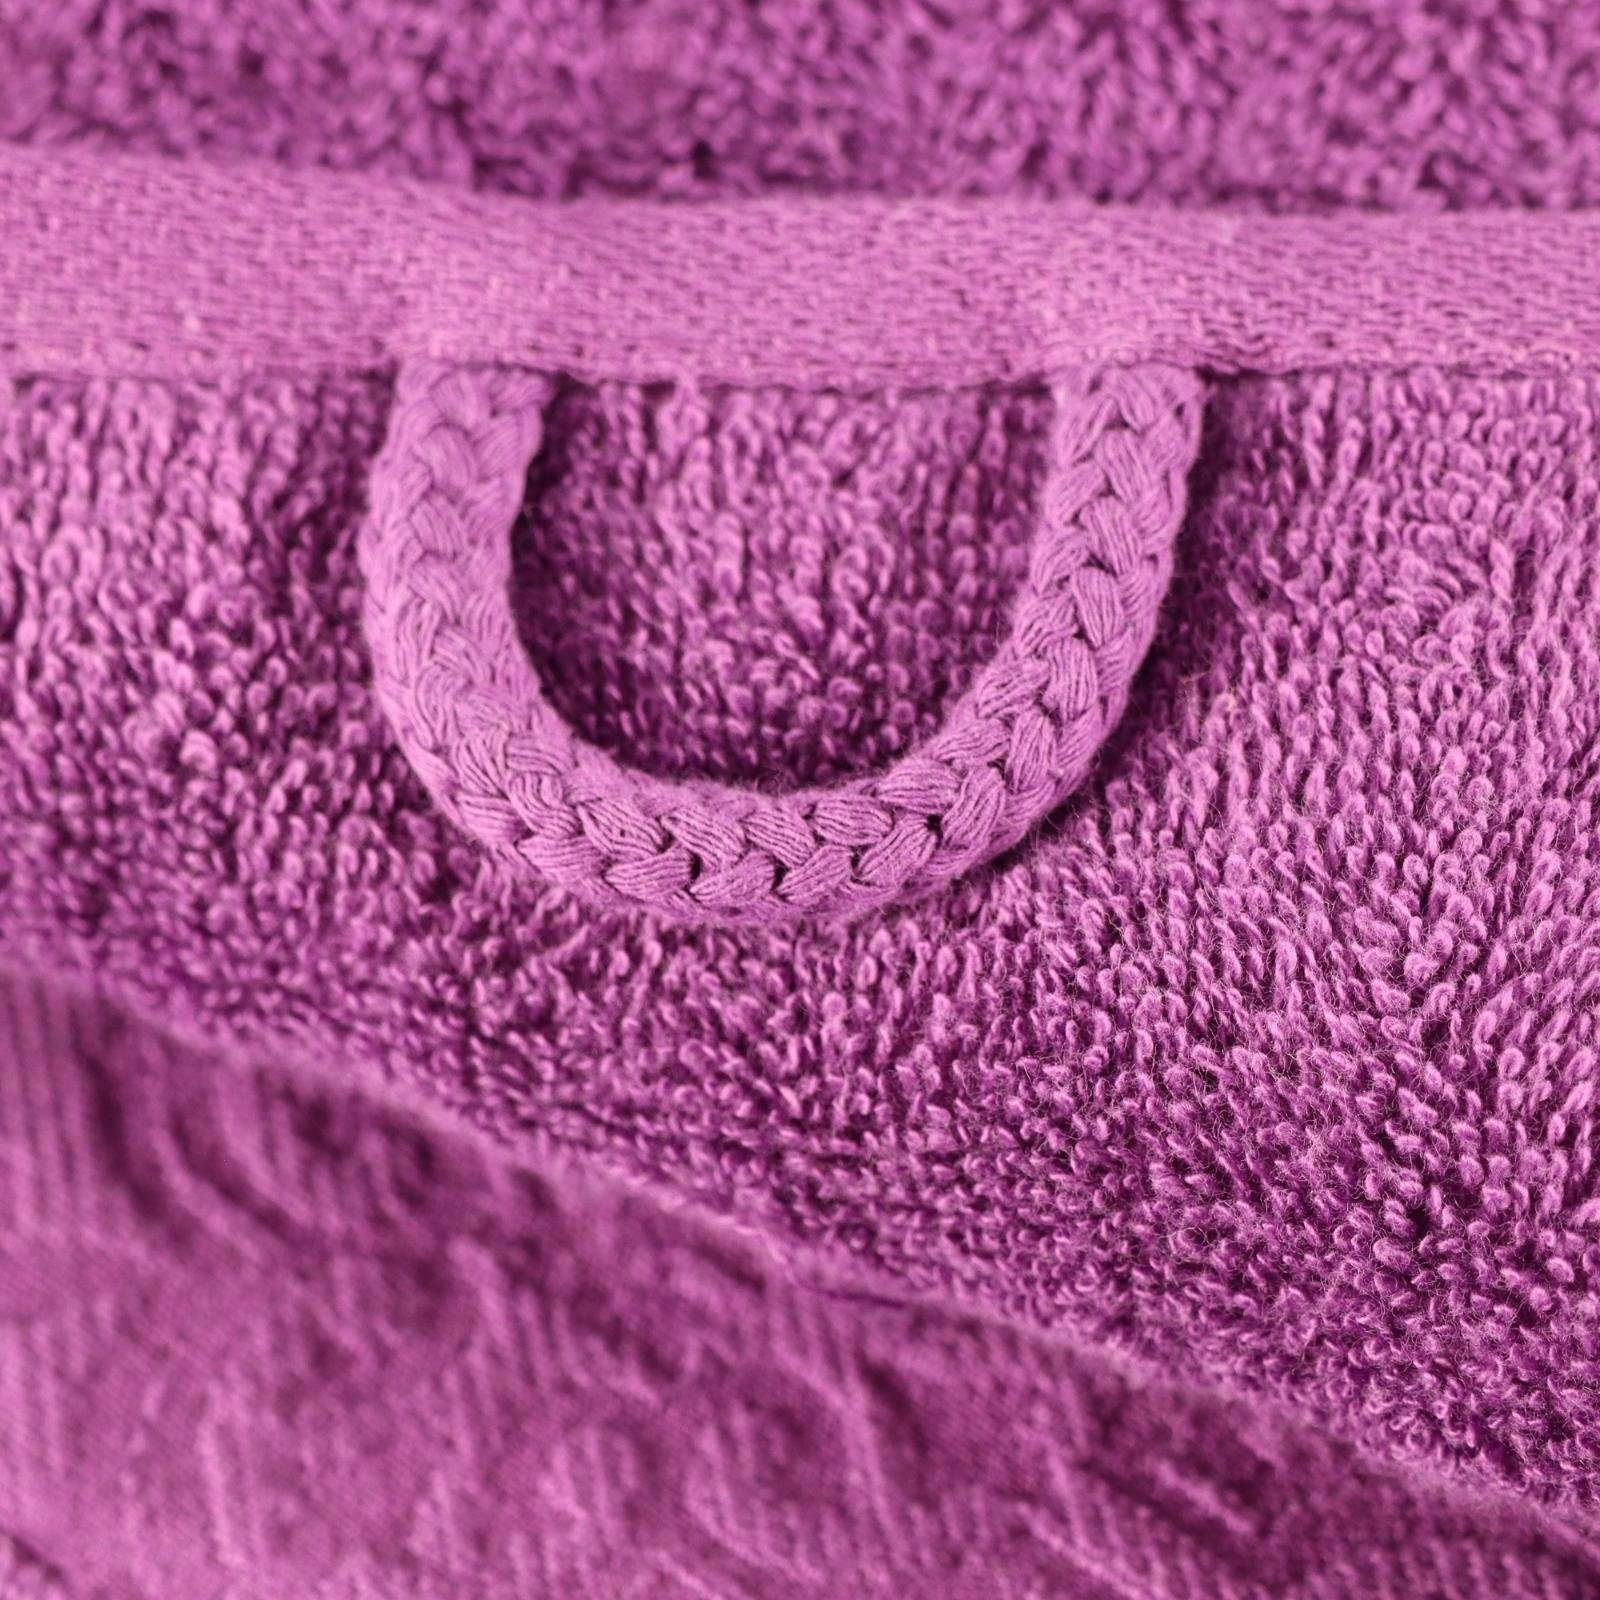 aus Handtuch Frottee - Hand- 100% Set &Duschtuch Handtücher Plentyfy Baumwolle, (6-St), - Set Duschhandtuch Badetuch 6tlg